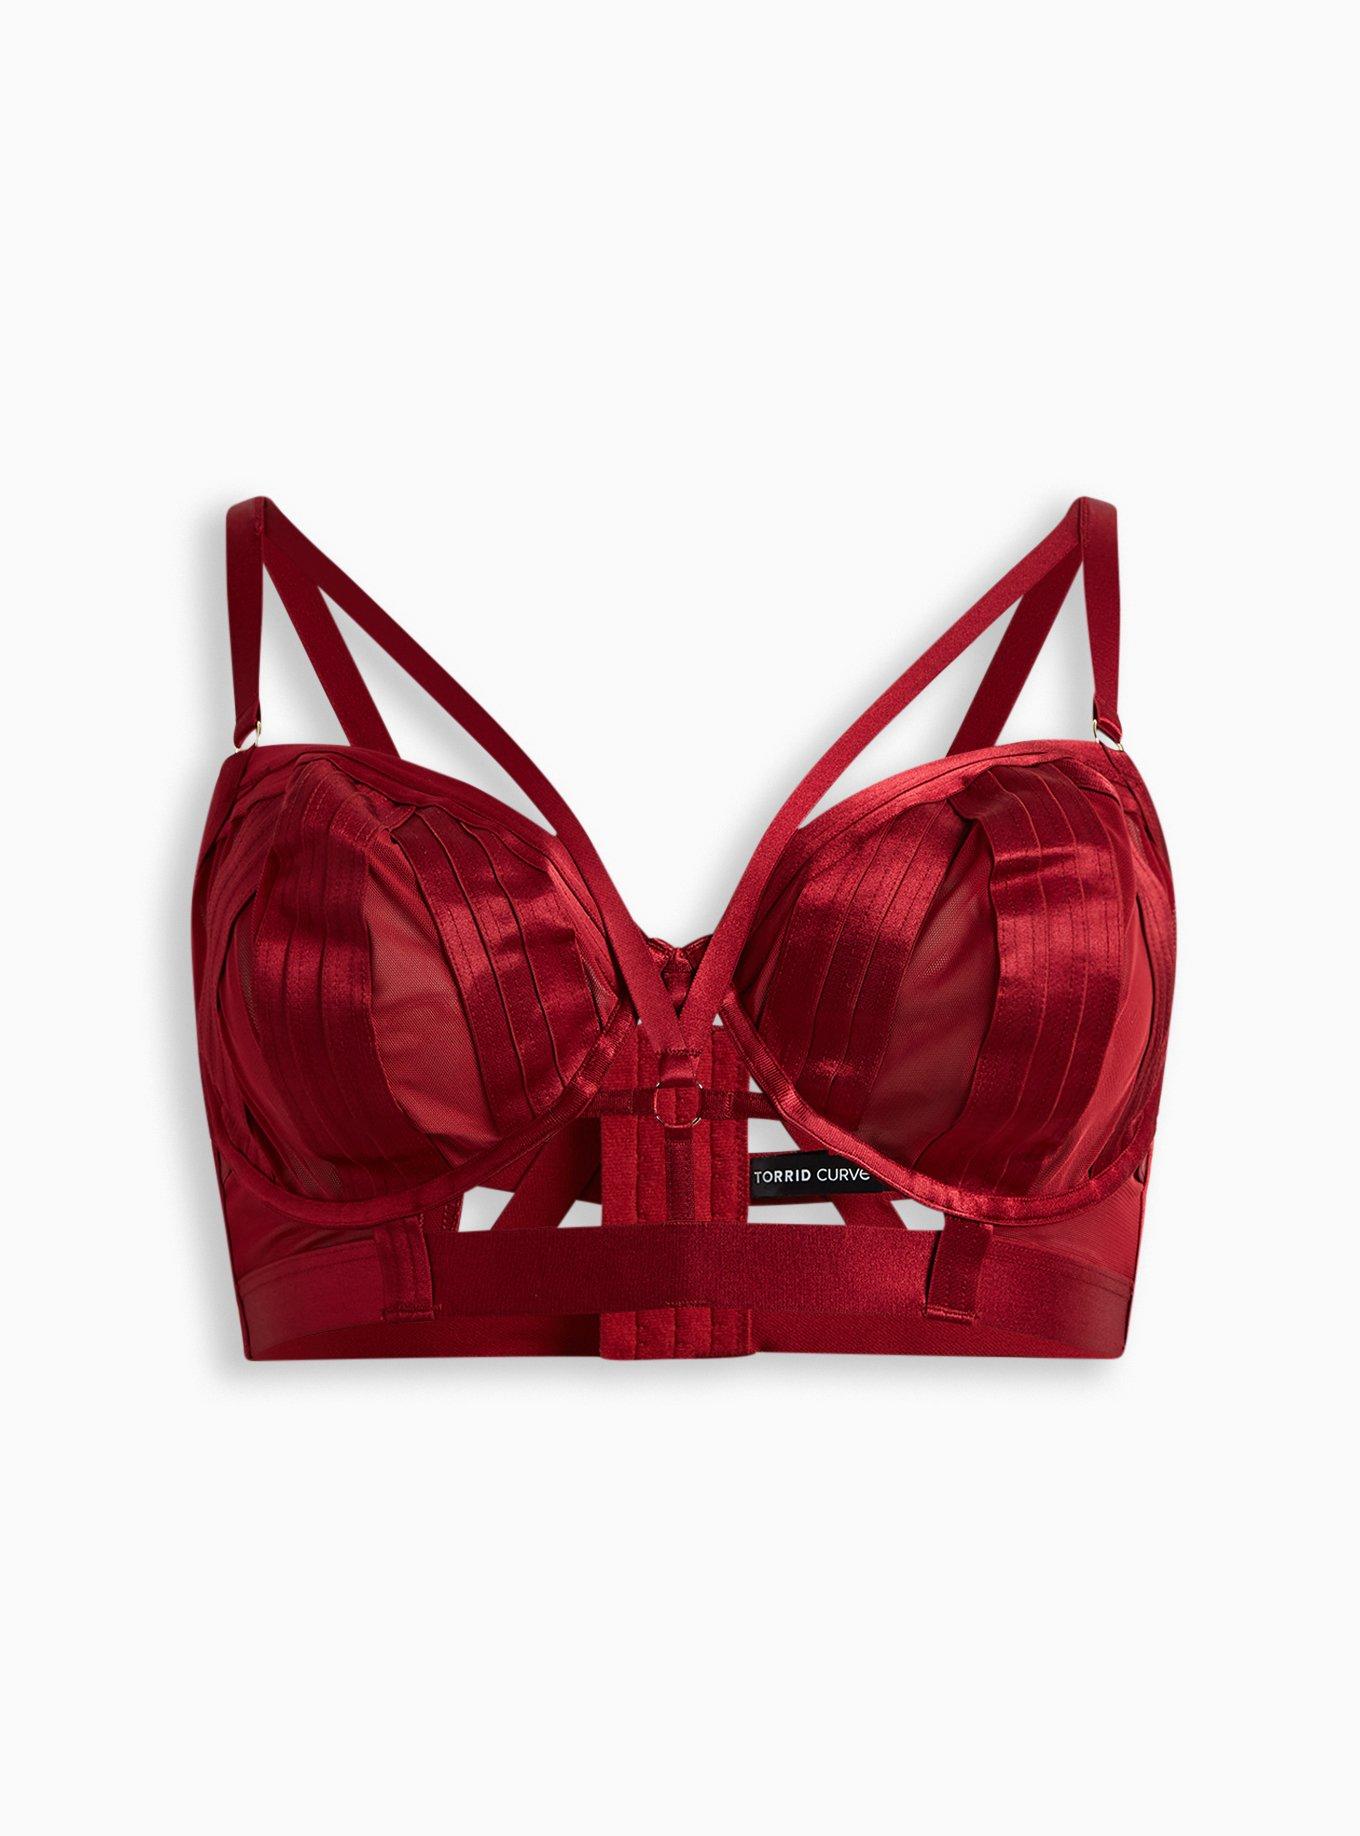 Torrid Red Strappy Underwire Longline Bralette Plus Size 4 4X 26 NWT Sexy